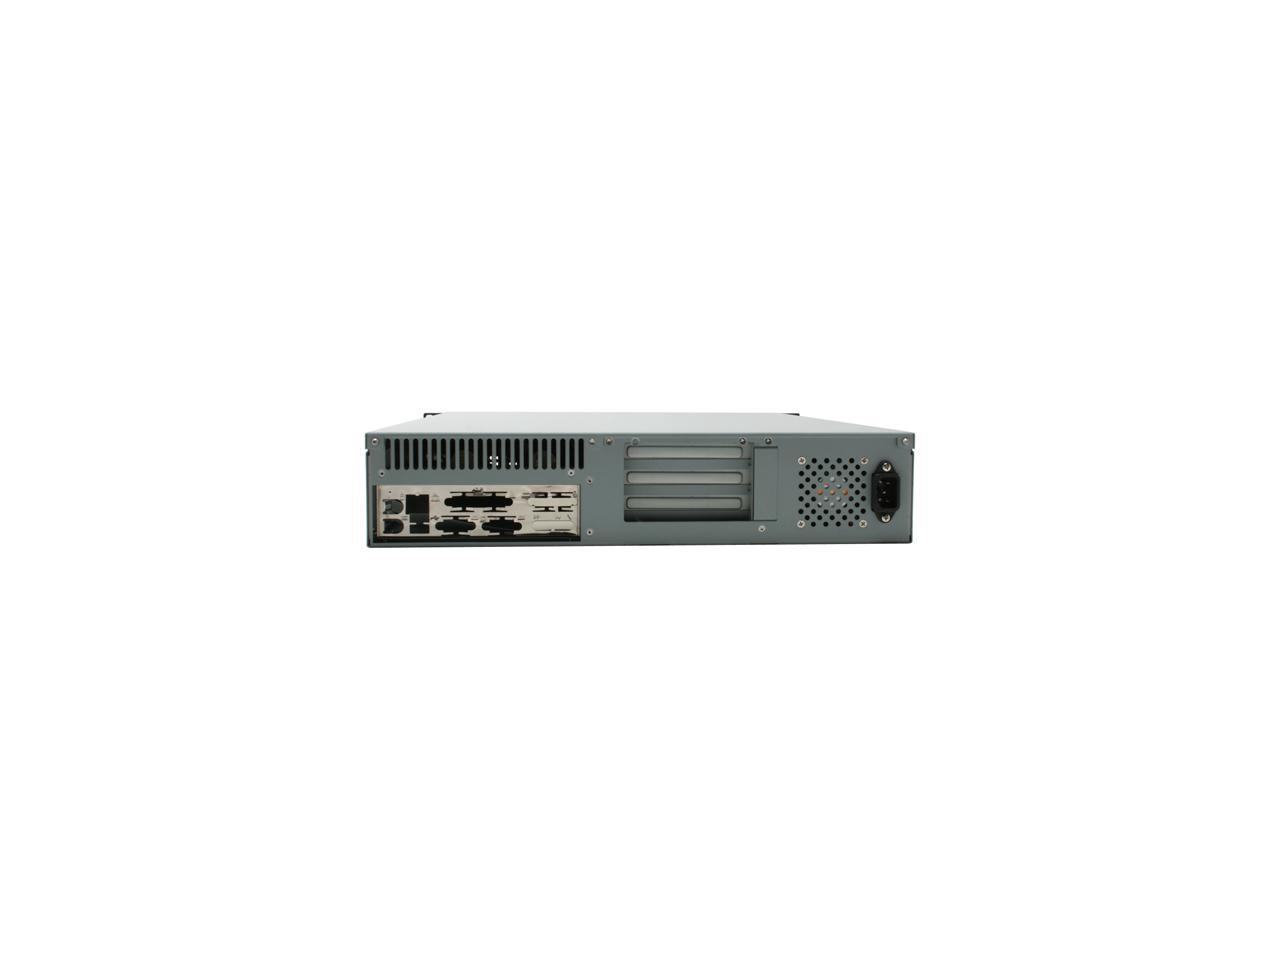 Hec Ra251C00F 1.2 Mm Thickness 2U Rackmount Server Case 2 External 5.25" Drive Bays